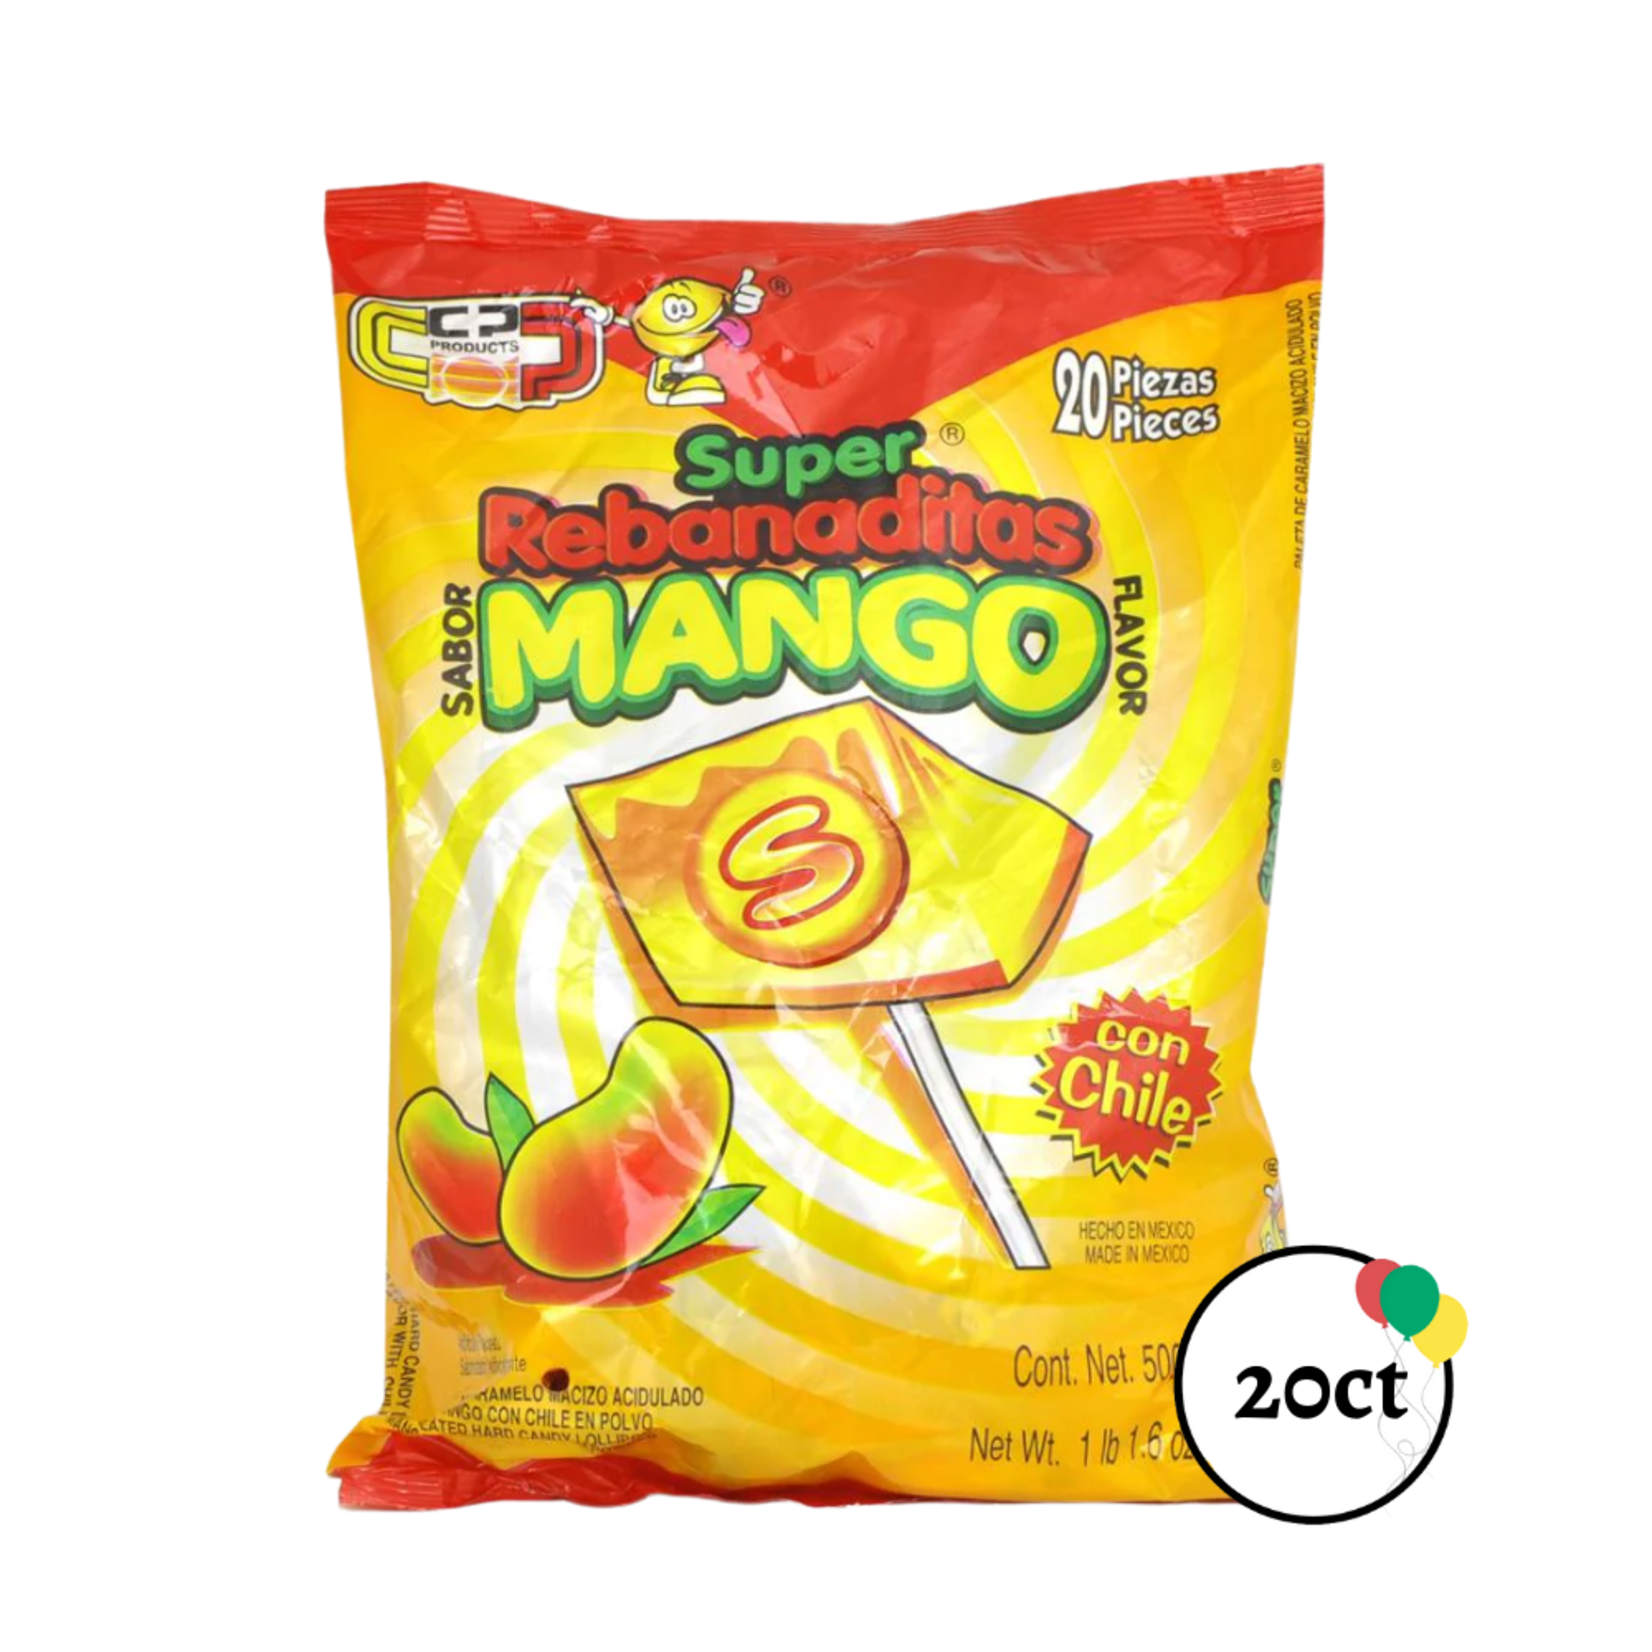 CP Products Super Rebanaditas Mango